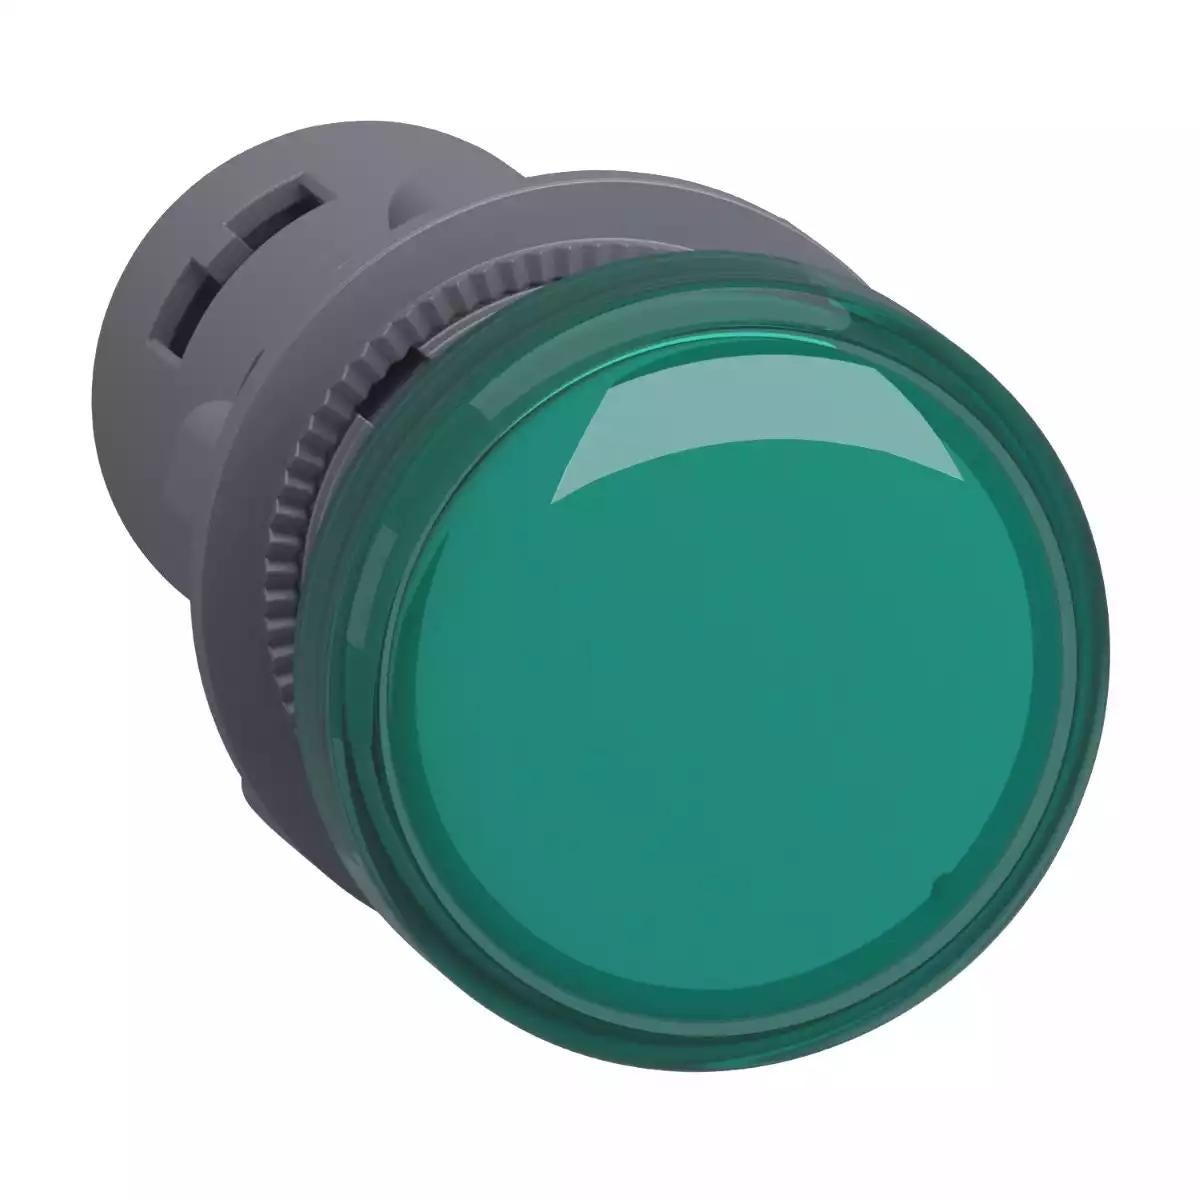 round pilot light Ø 22 - green - integral LED - 220 V AC - screw clamp terminals